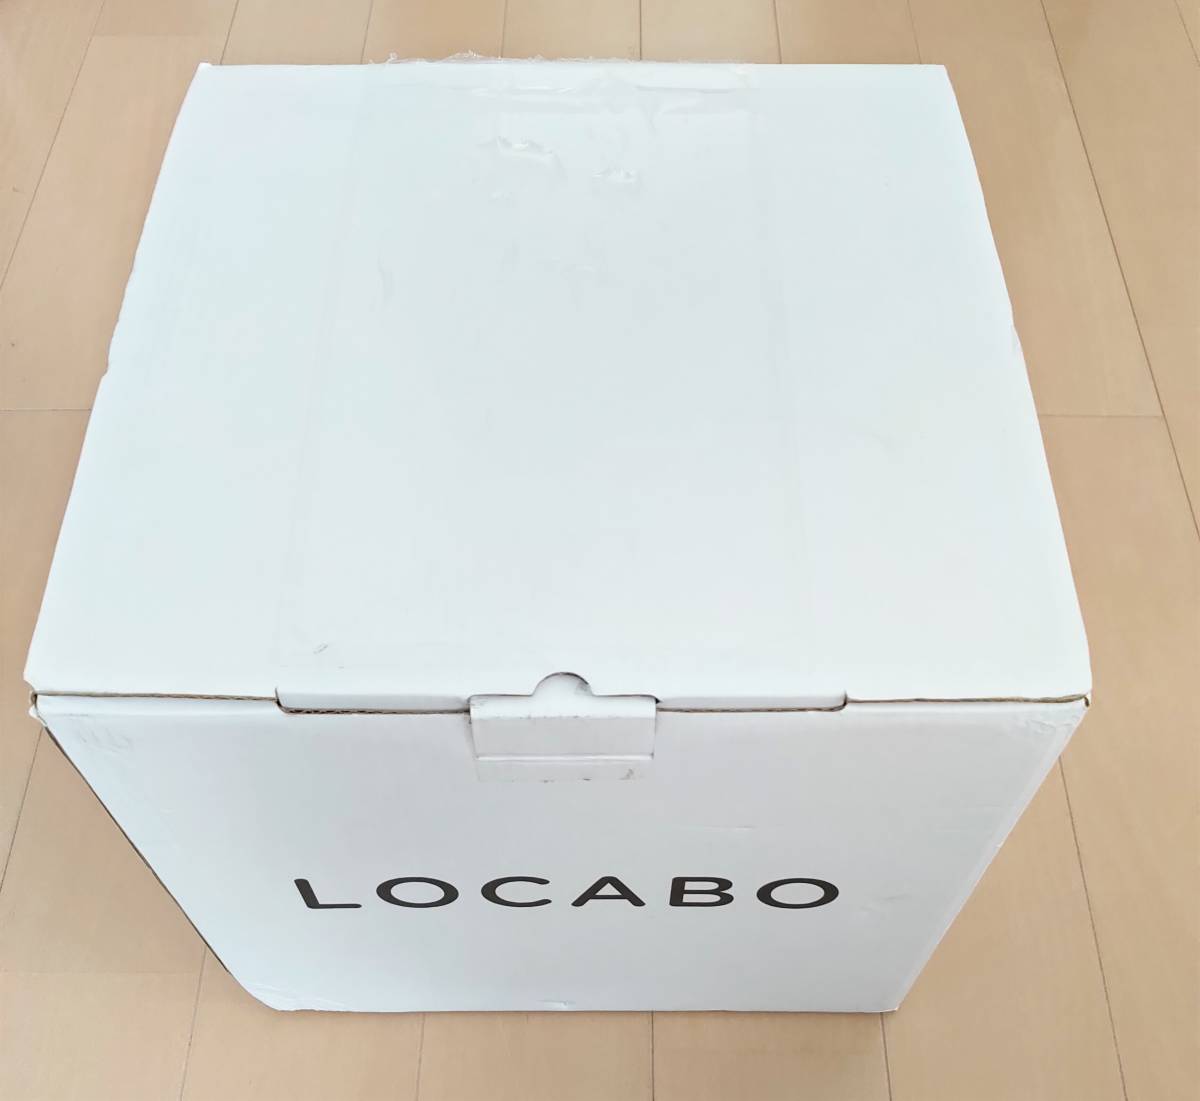 LOCABO 糖質カット炊飯器 ホワイト JM-C20E-W restaurantecomeketo.com